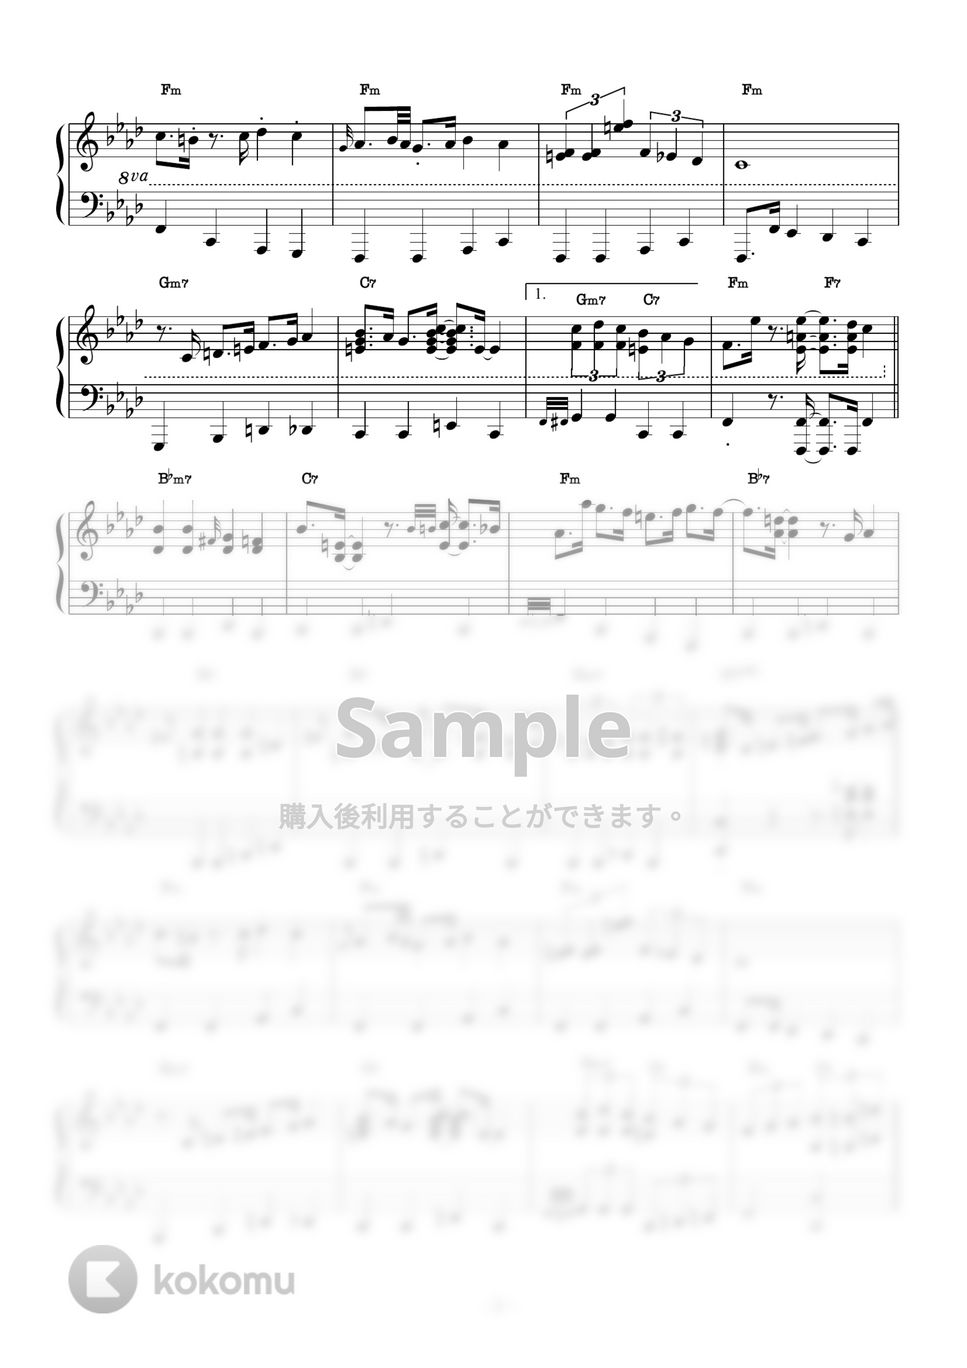 DAVID MACK - シンデレラ「ビビディバビディブー」ヴィラン風アレンジ (ピアノソロ / ヴィラン風 / コード有) by CAFUNE